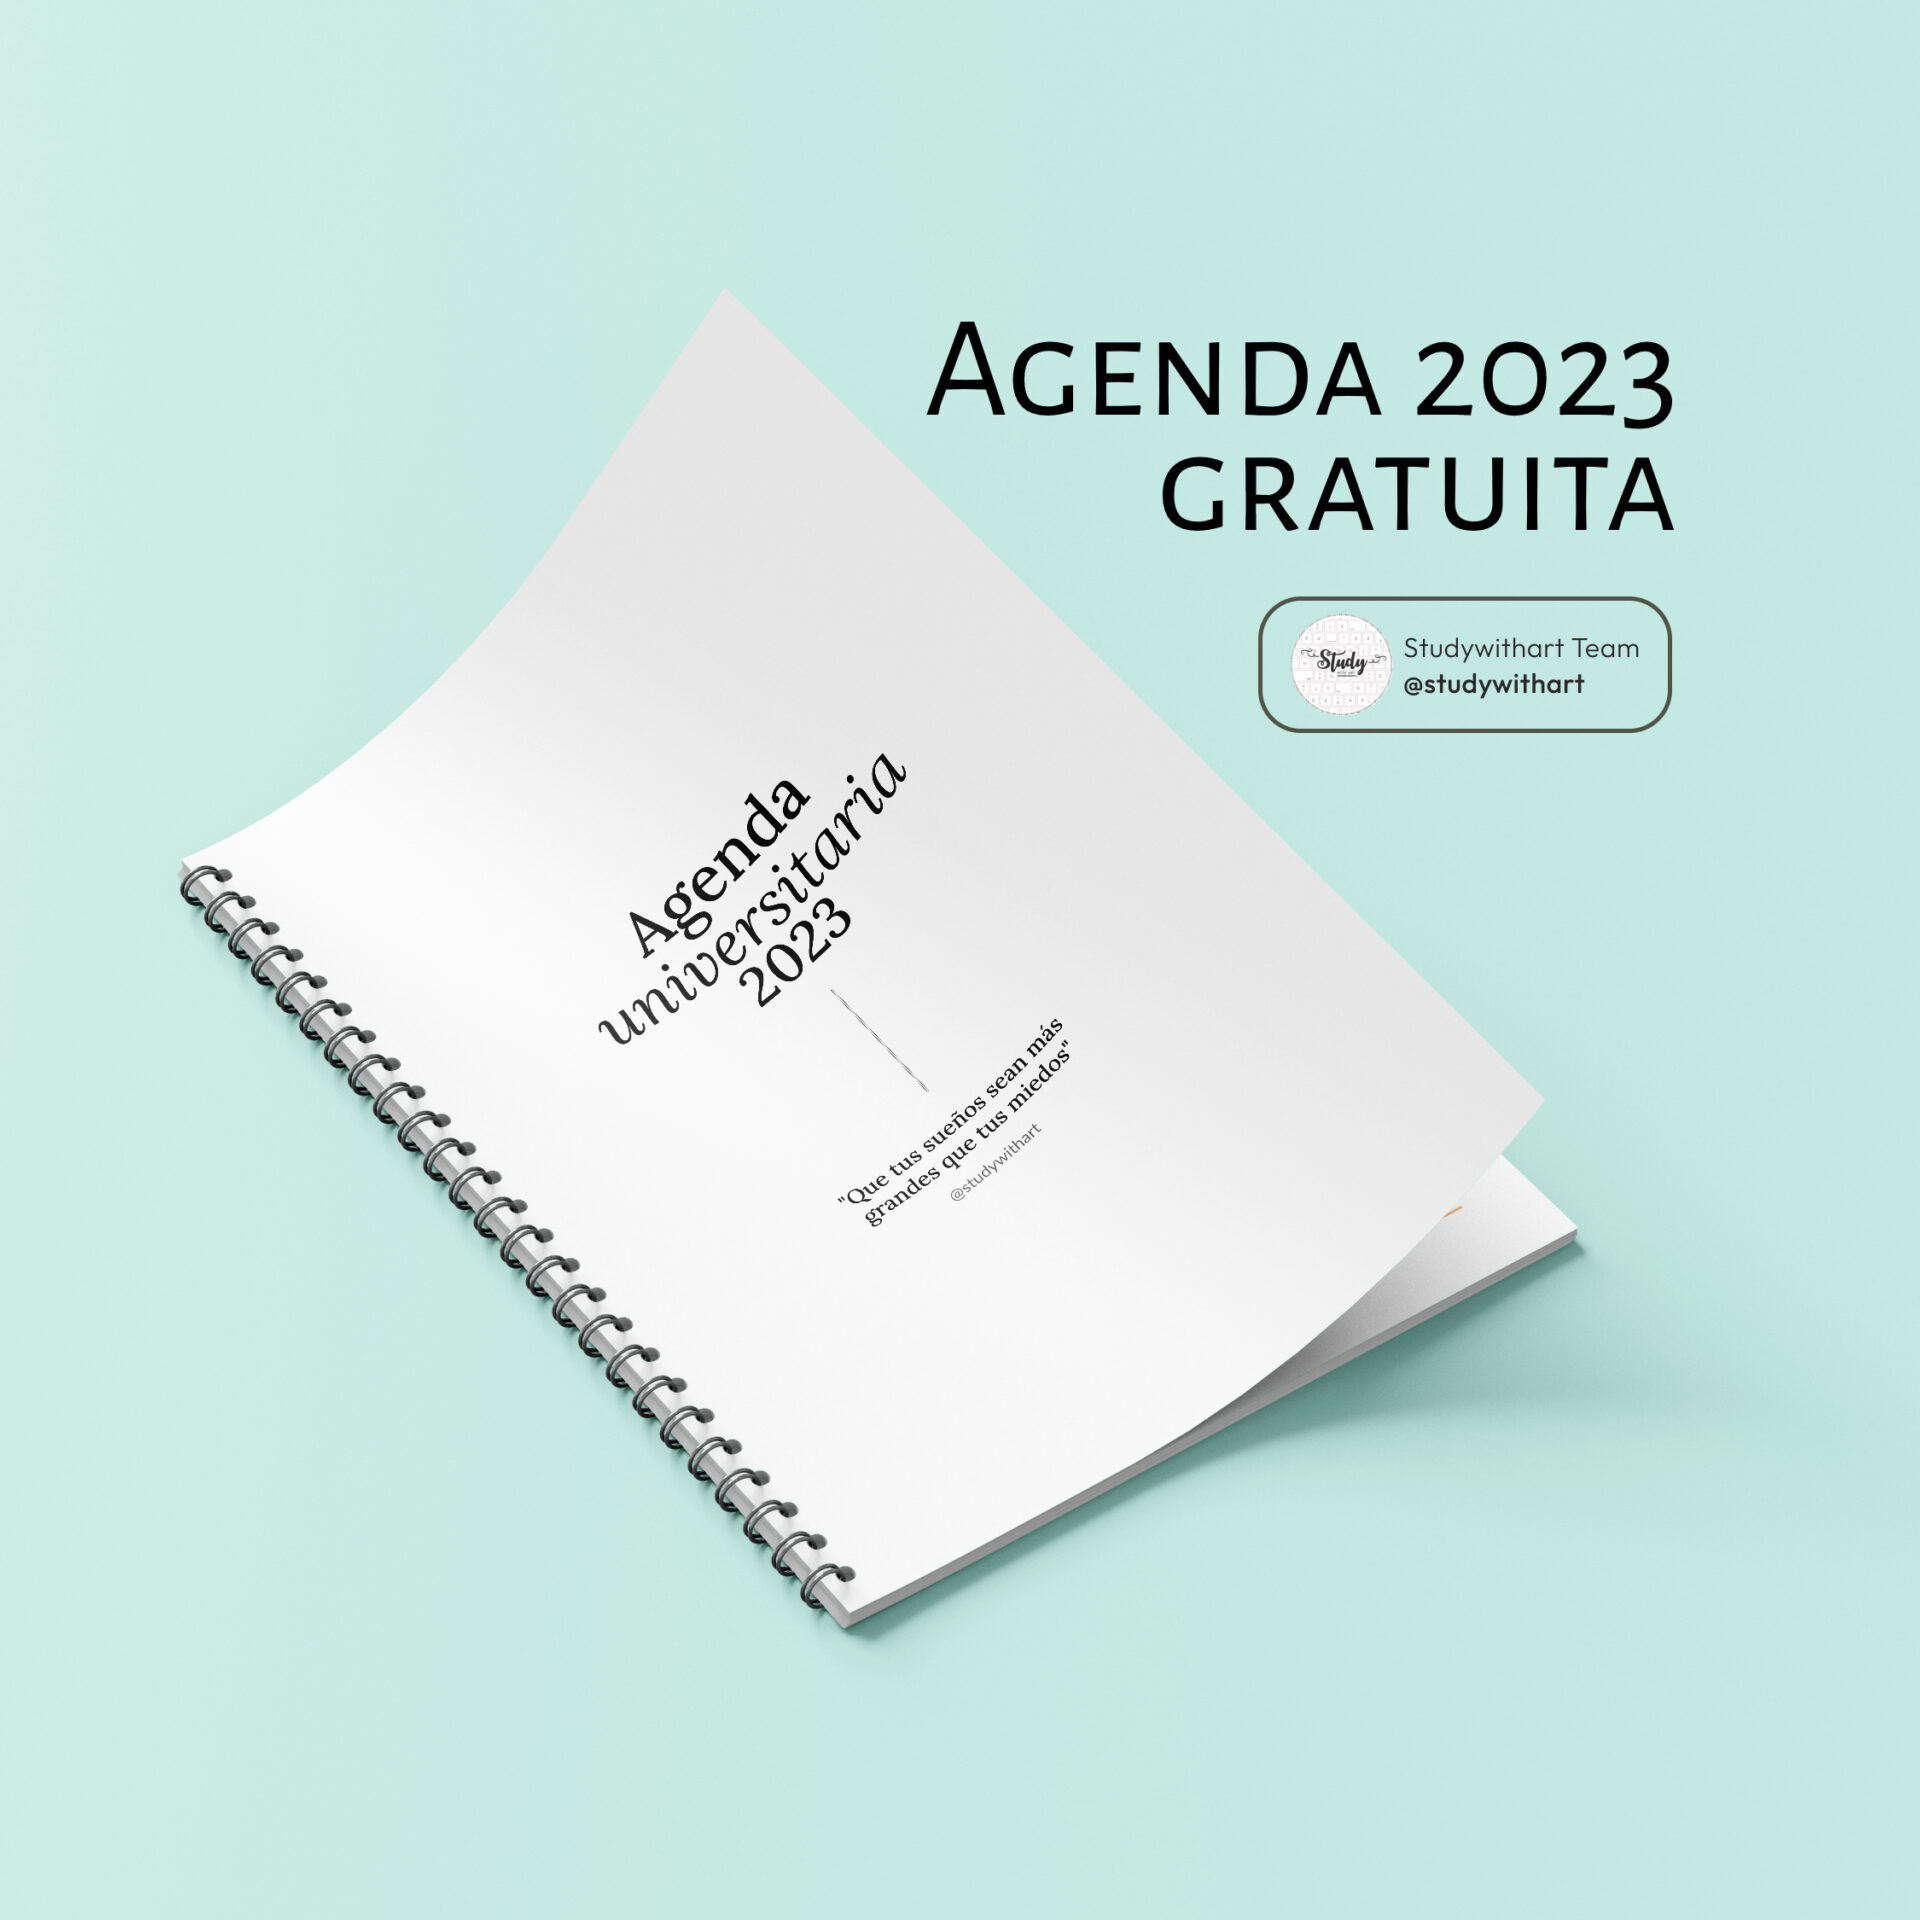 Agenda 2023 Pdf Gratis Agenda 2023 GRATIS para descargar e imprimir + Agenda digital 100%  personalizada y minimalista para estudiantes – studywithart – Studywithart